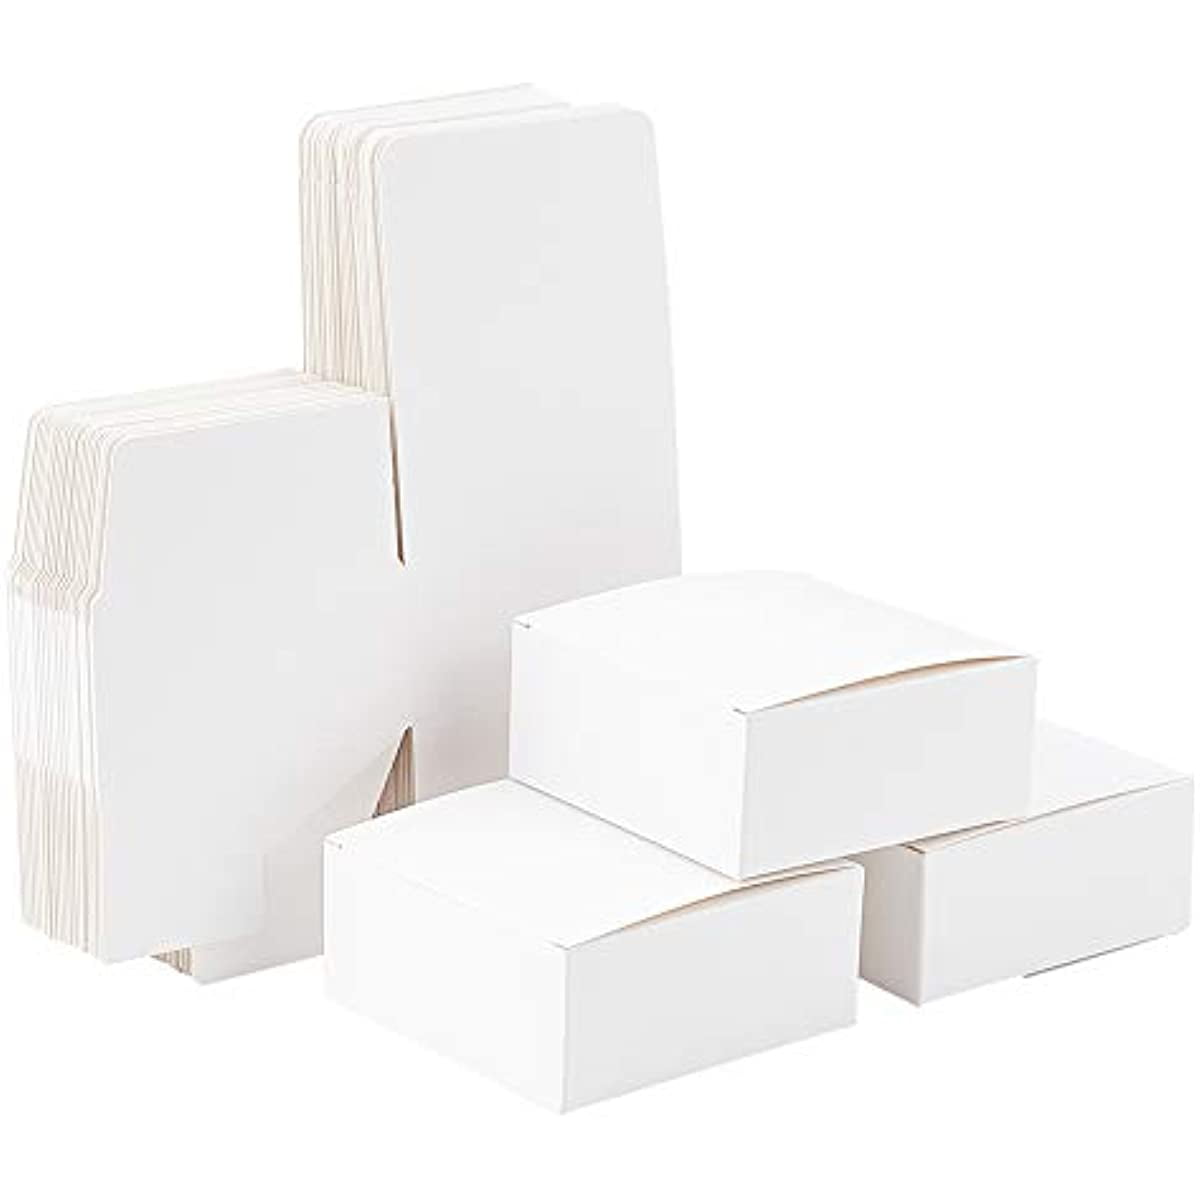 White Gift Boxes, Jewelry Gift Box, Kraft Gift Boxes, Small Gift Box,  Wedding Bridesmaid Gift Boxes, Cotton Filled, 3.5x3.5x1, 10 BOXES 